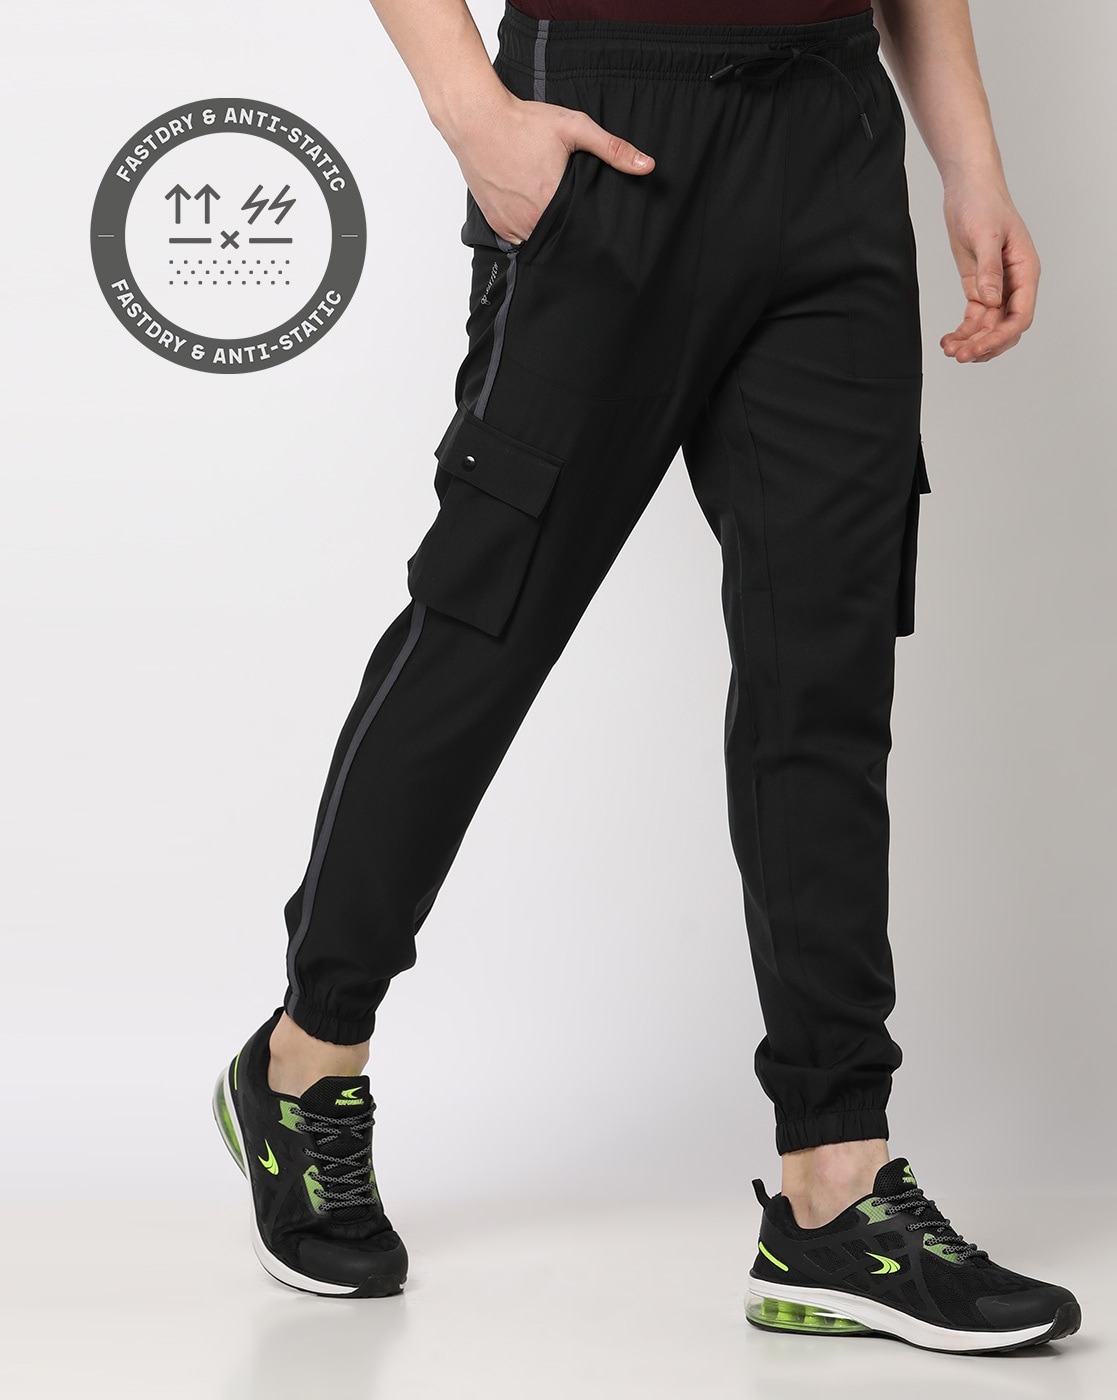 Snap cargo jeans in jet black restocked in all sizes! | Instagram